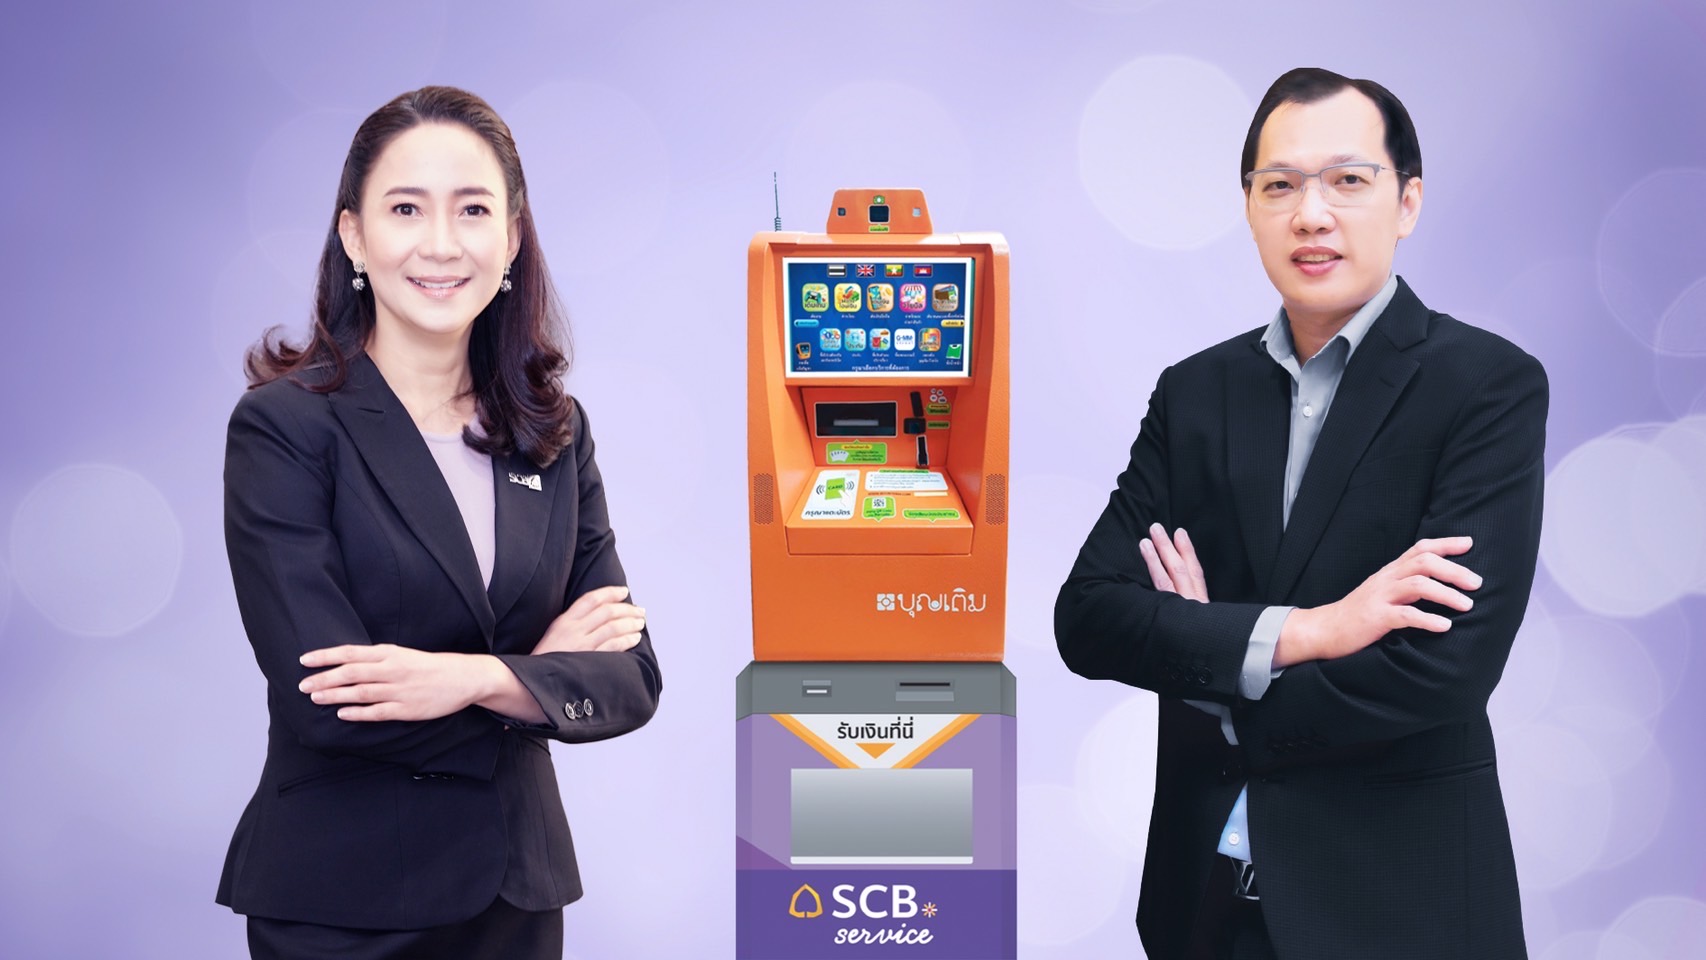 SCBจับมือ FSMARTเพิ่มการเข้าถึง บริการธนาคารเปิดให้บริการถอนเงินสดผ่าน ตู้บุญเติม Mini ATM กว่า 5,000 จุด ทั่วประเทศ